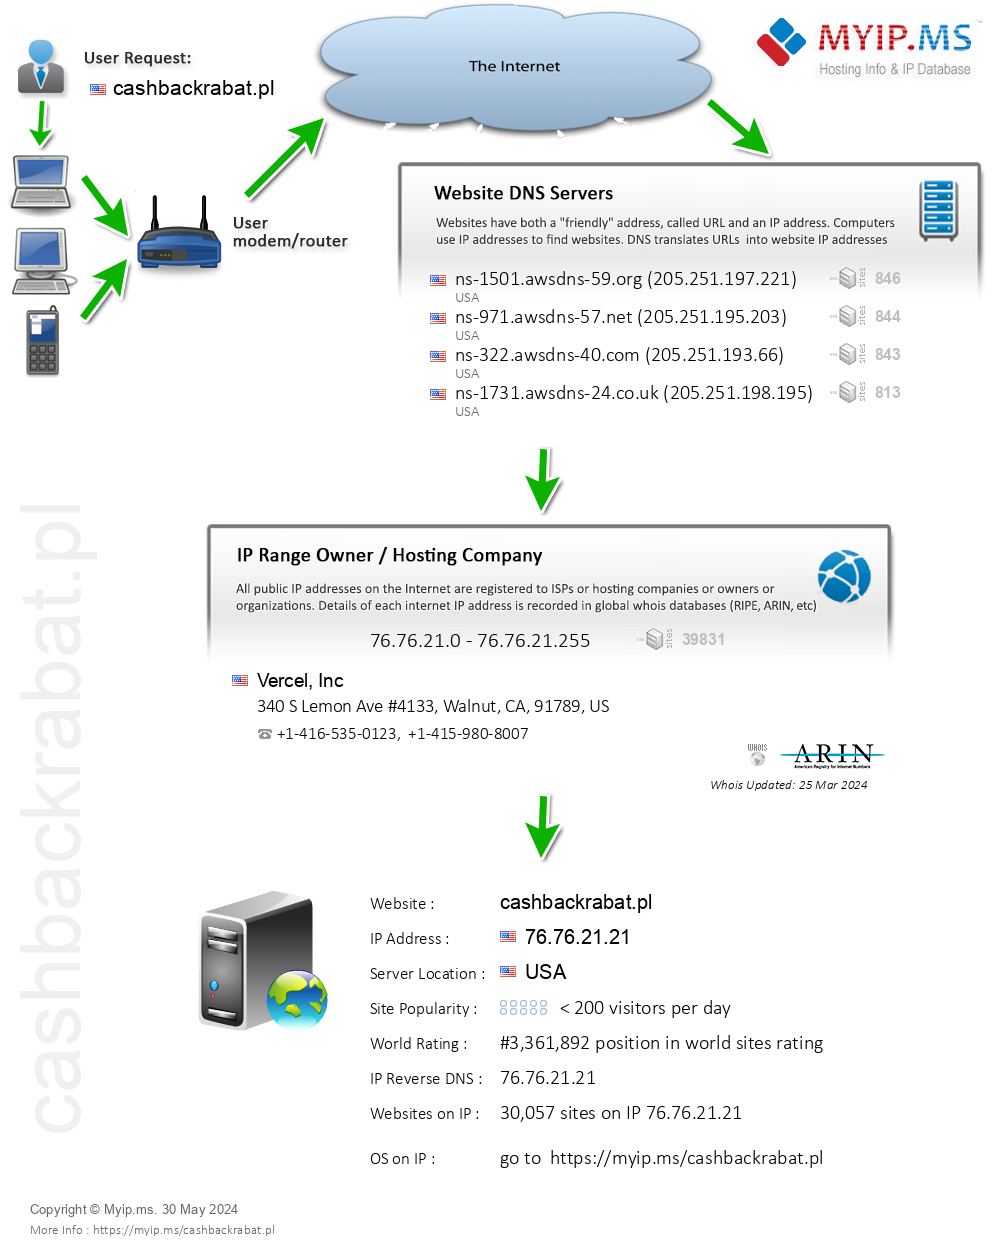 Cashbackrabat.pl - Website Hosting Visual IP Diagram